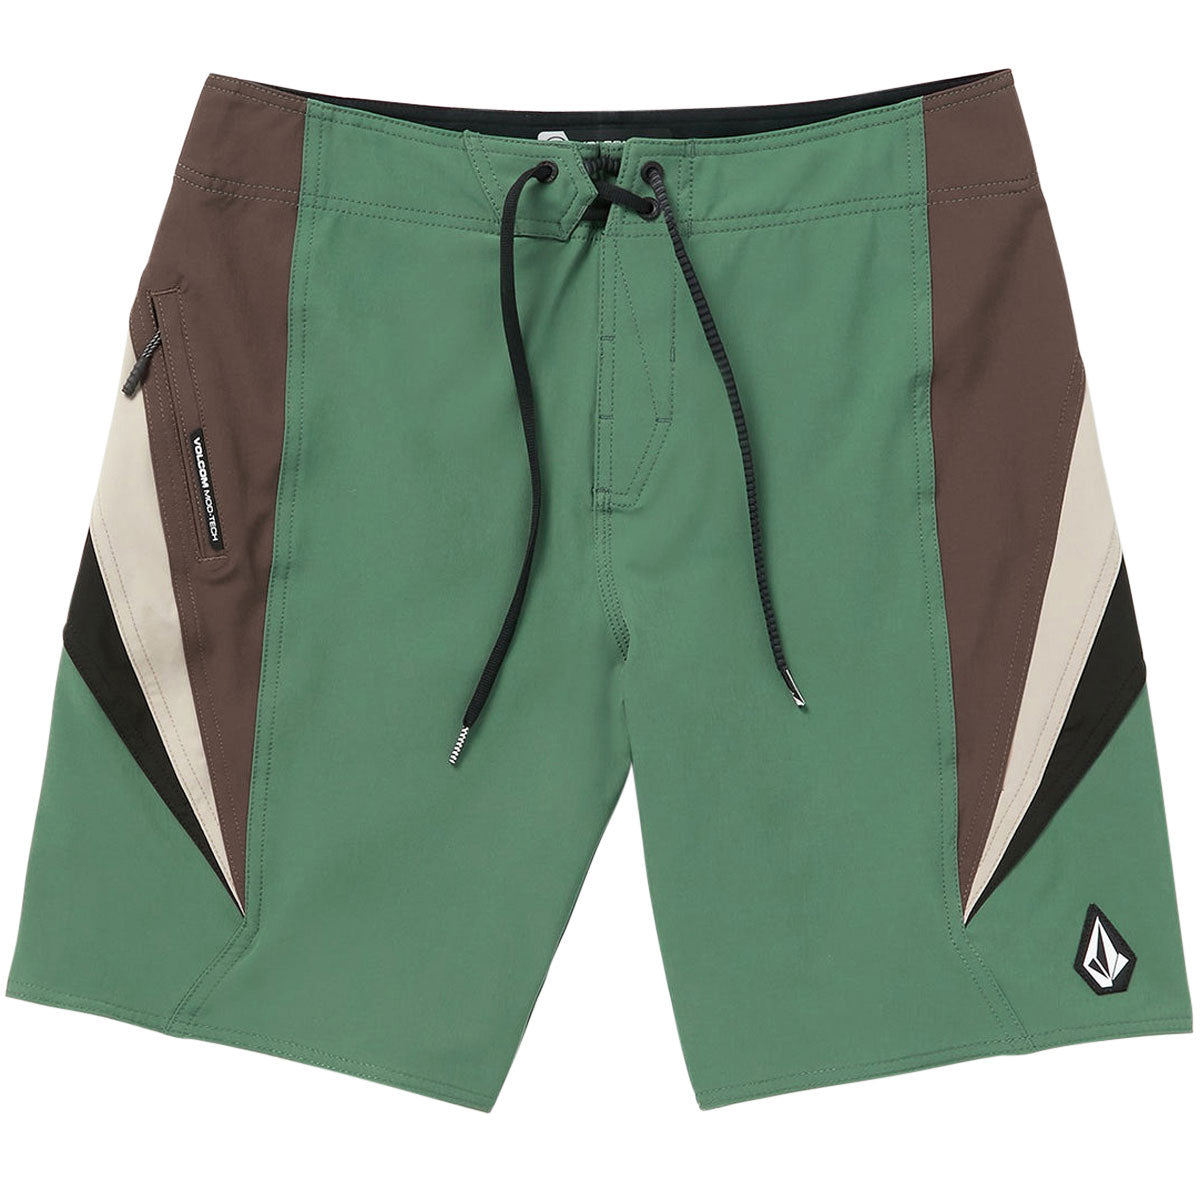 Volcom Surf Vitals J Robinson Mod 20 Board Shorts - Fir Green image 1